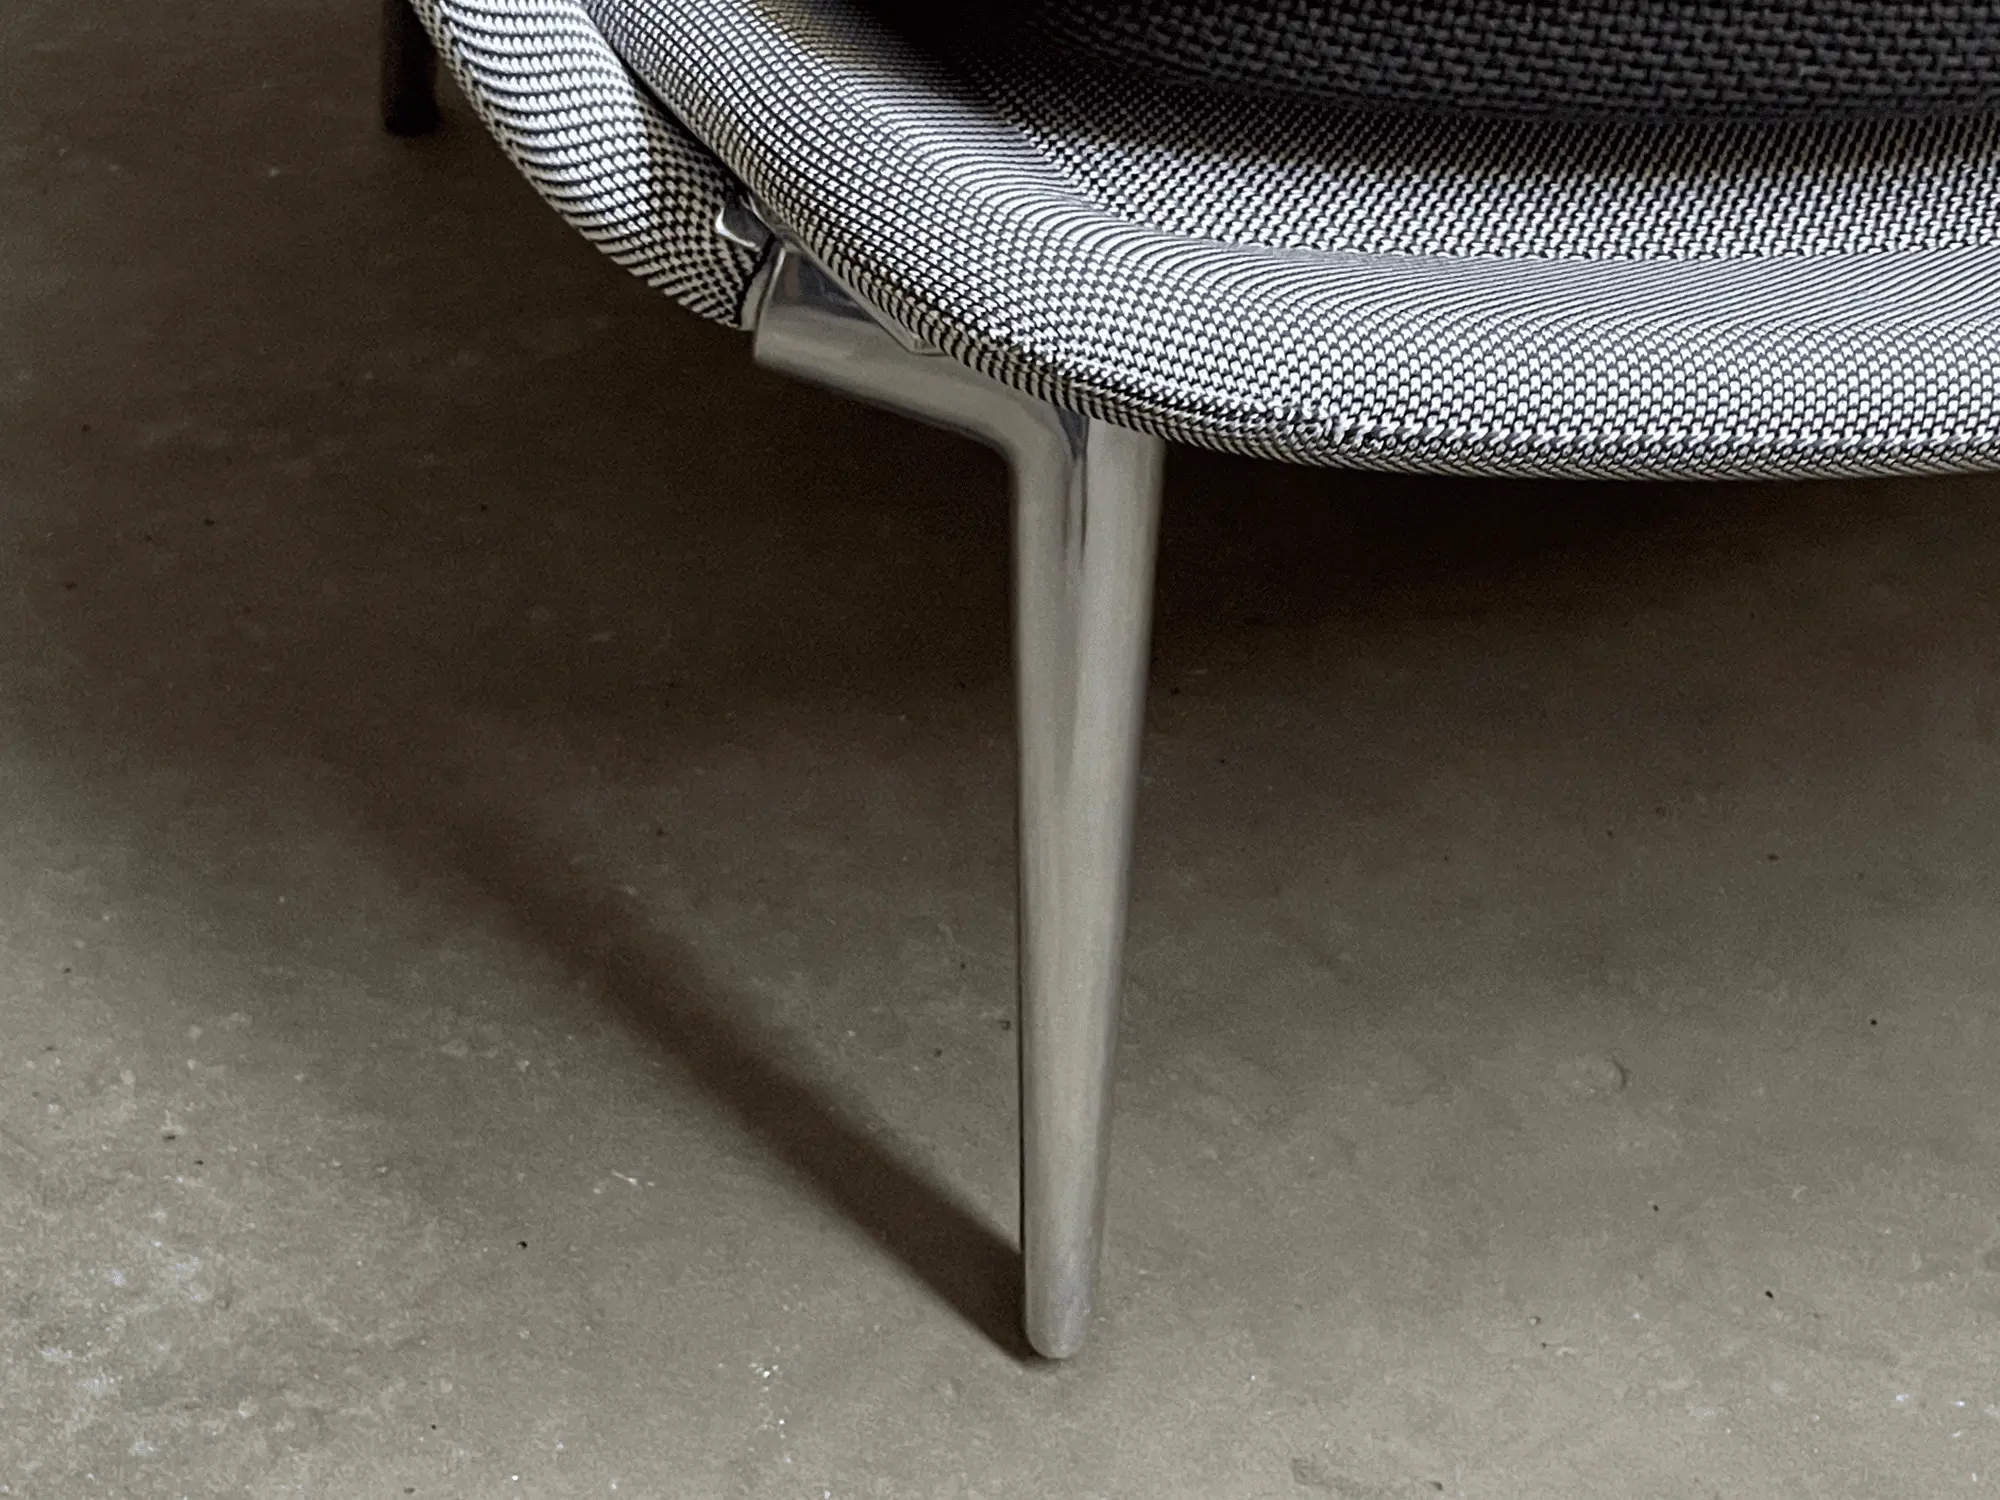 Slow Chair Sessel Textil Aluminium Creme 8